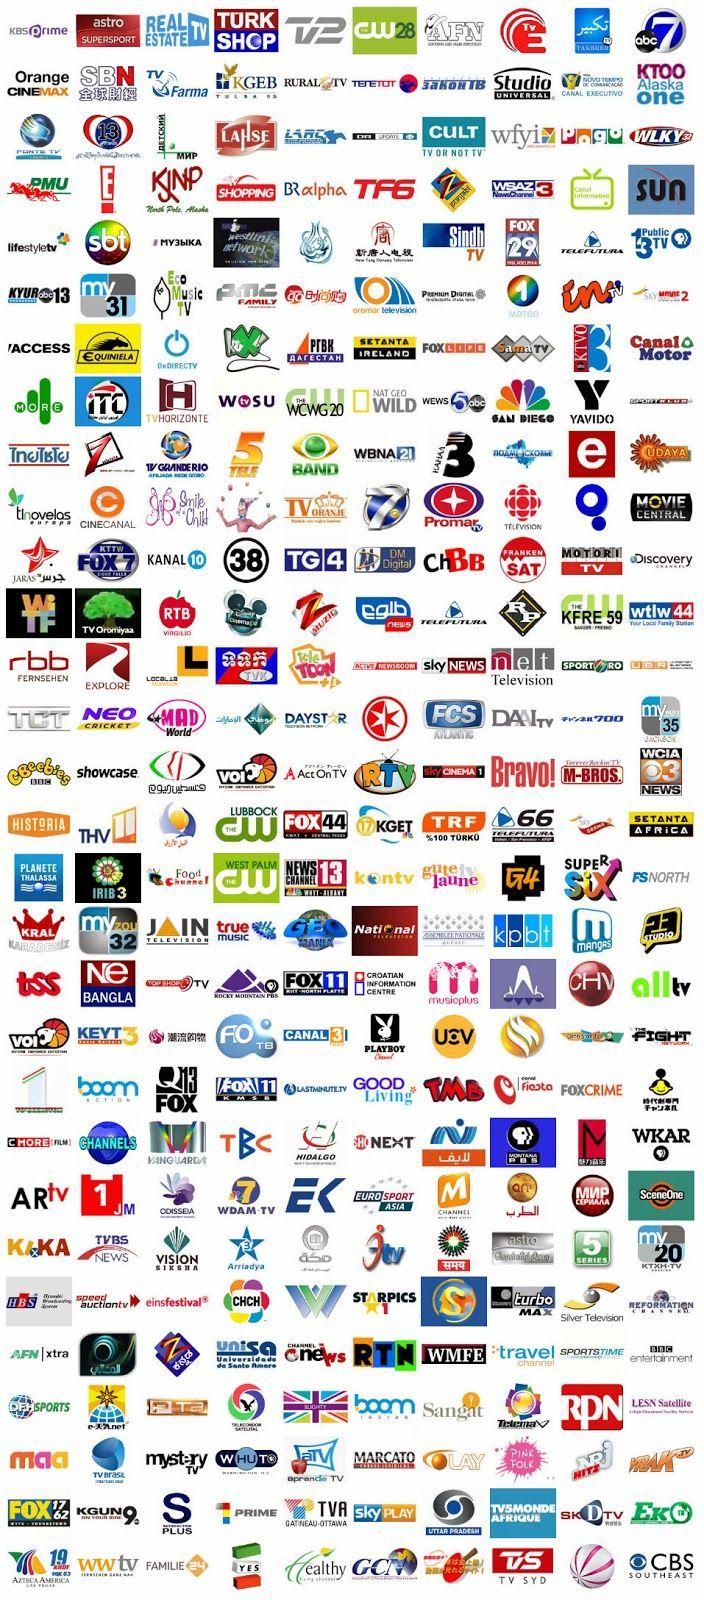 Names Logo - TV Channel Logos and Names | Logos | Pinterest | Tv channel logo ...